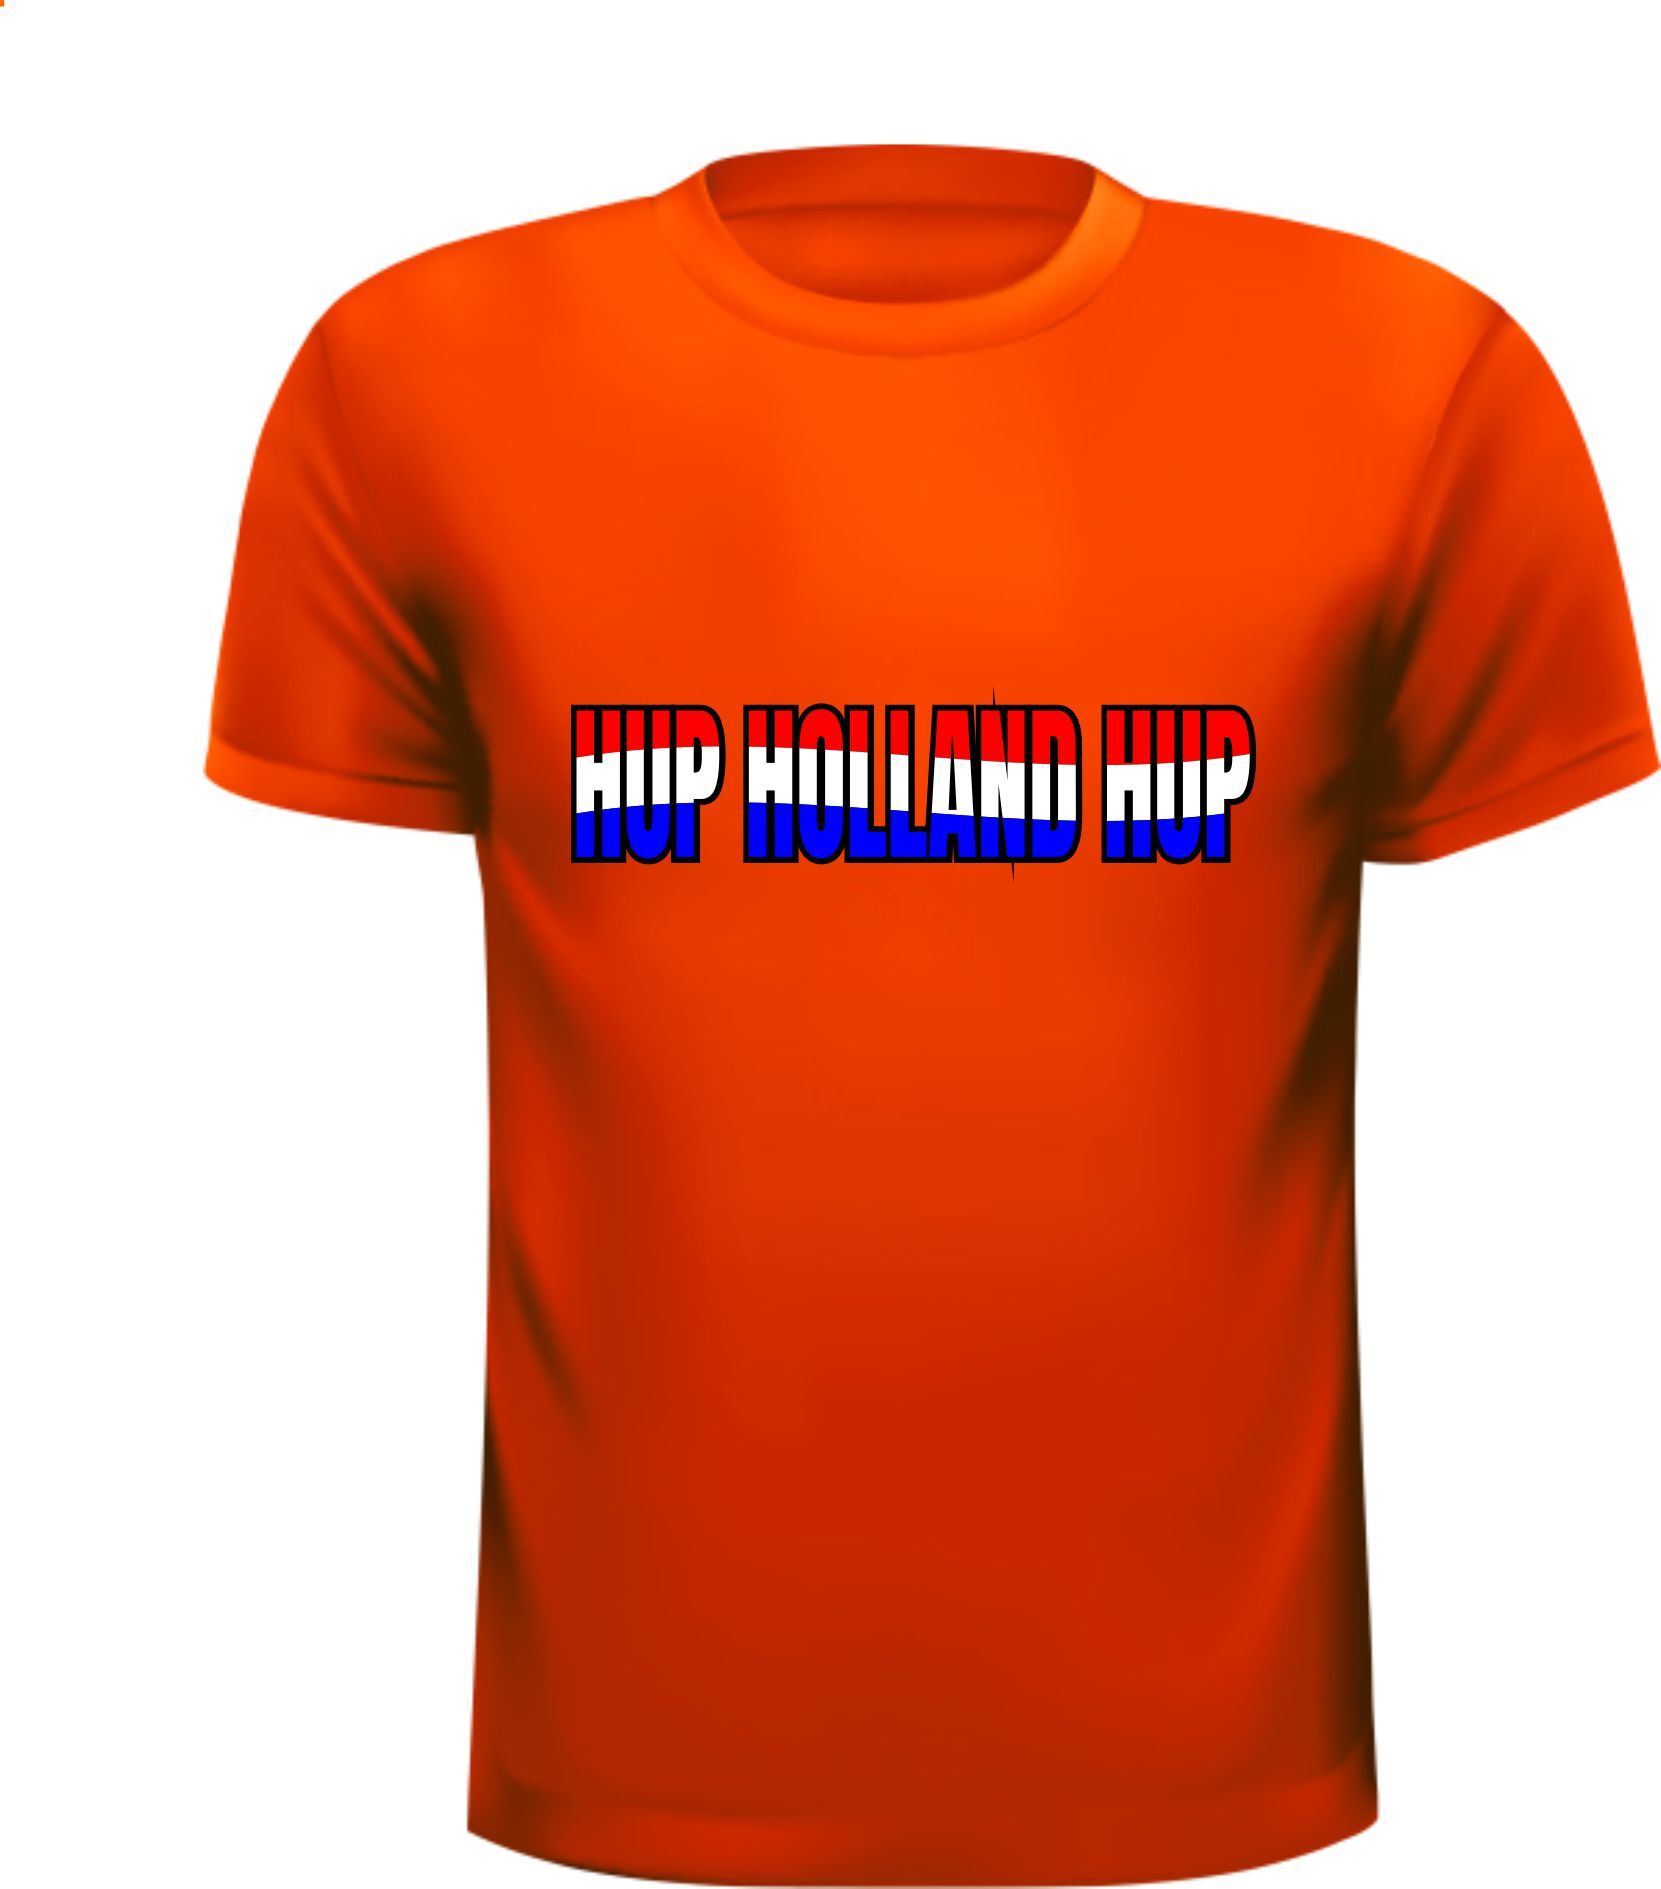 Shirtje oranje Hup Holland Hup